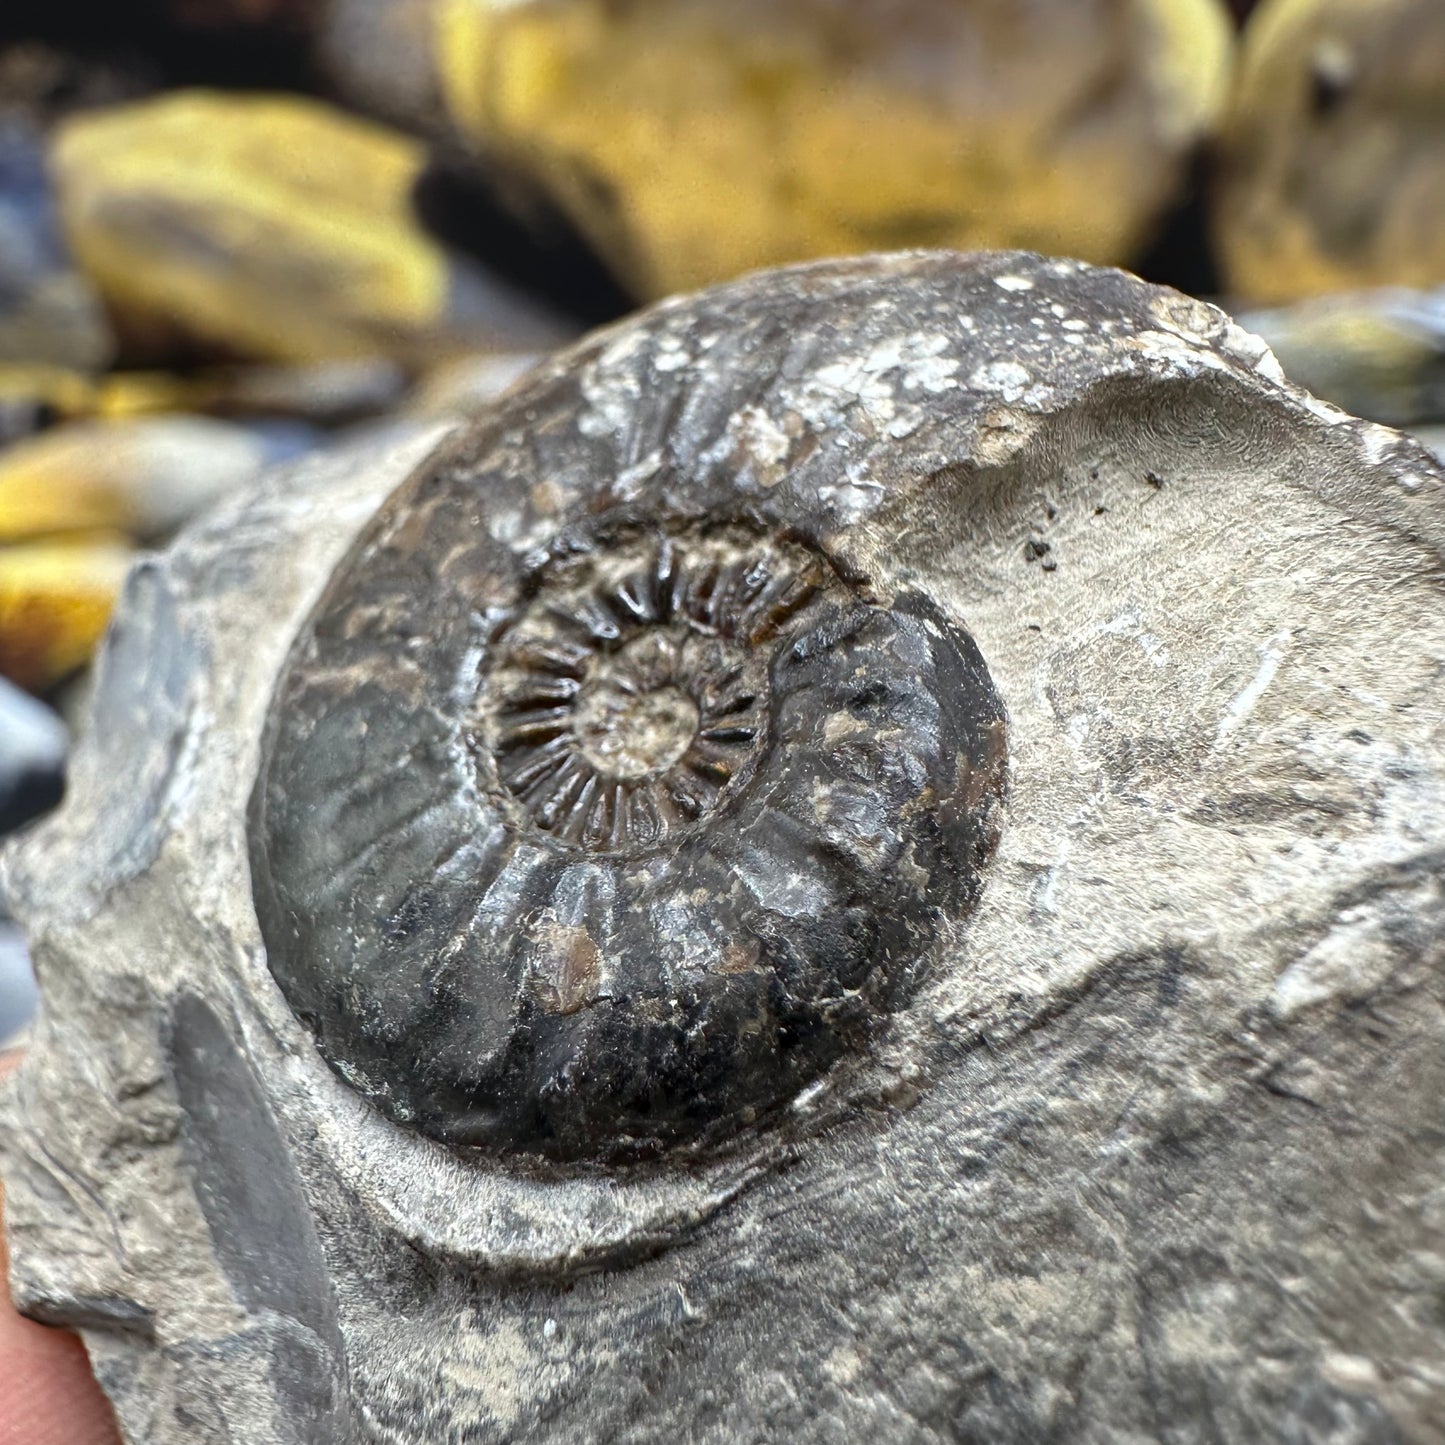 Amaltheus striatus ammonite fossil - Whitby, North Yorkshire